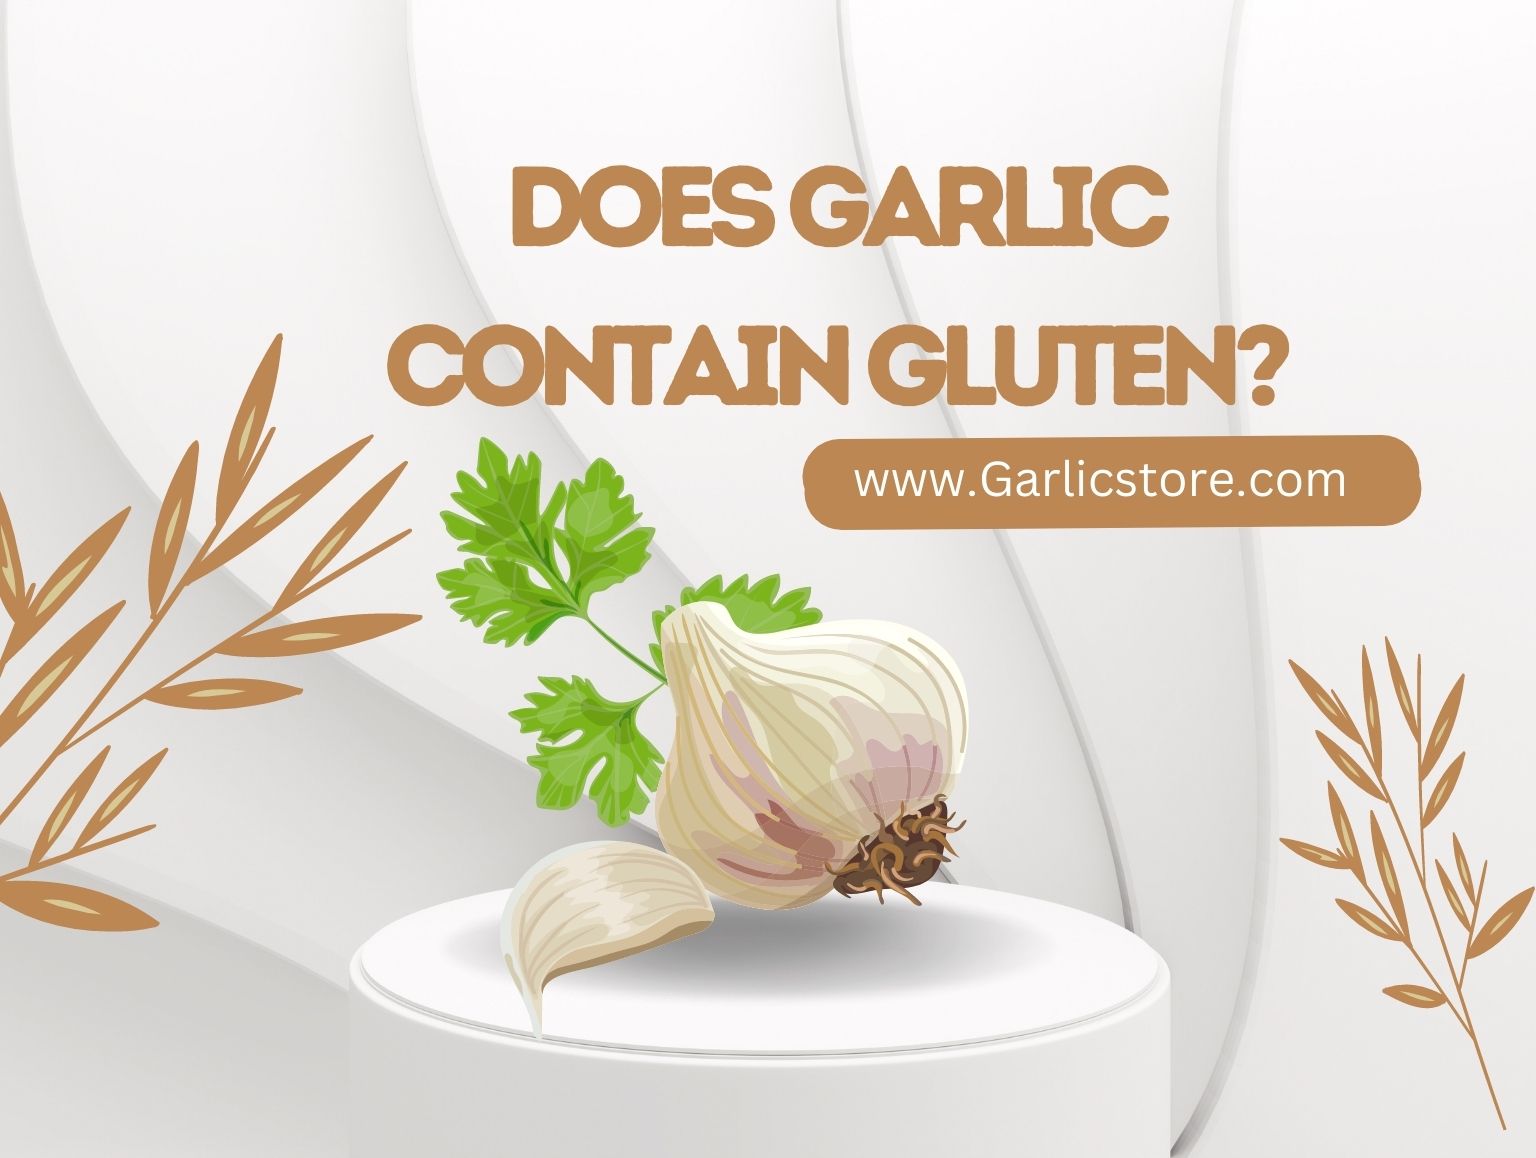 does garlic contain gluten